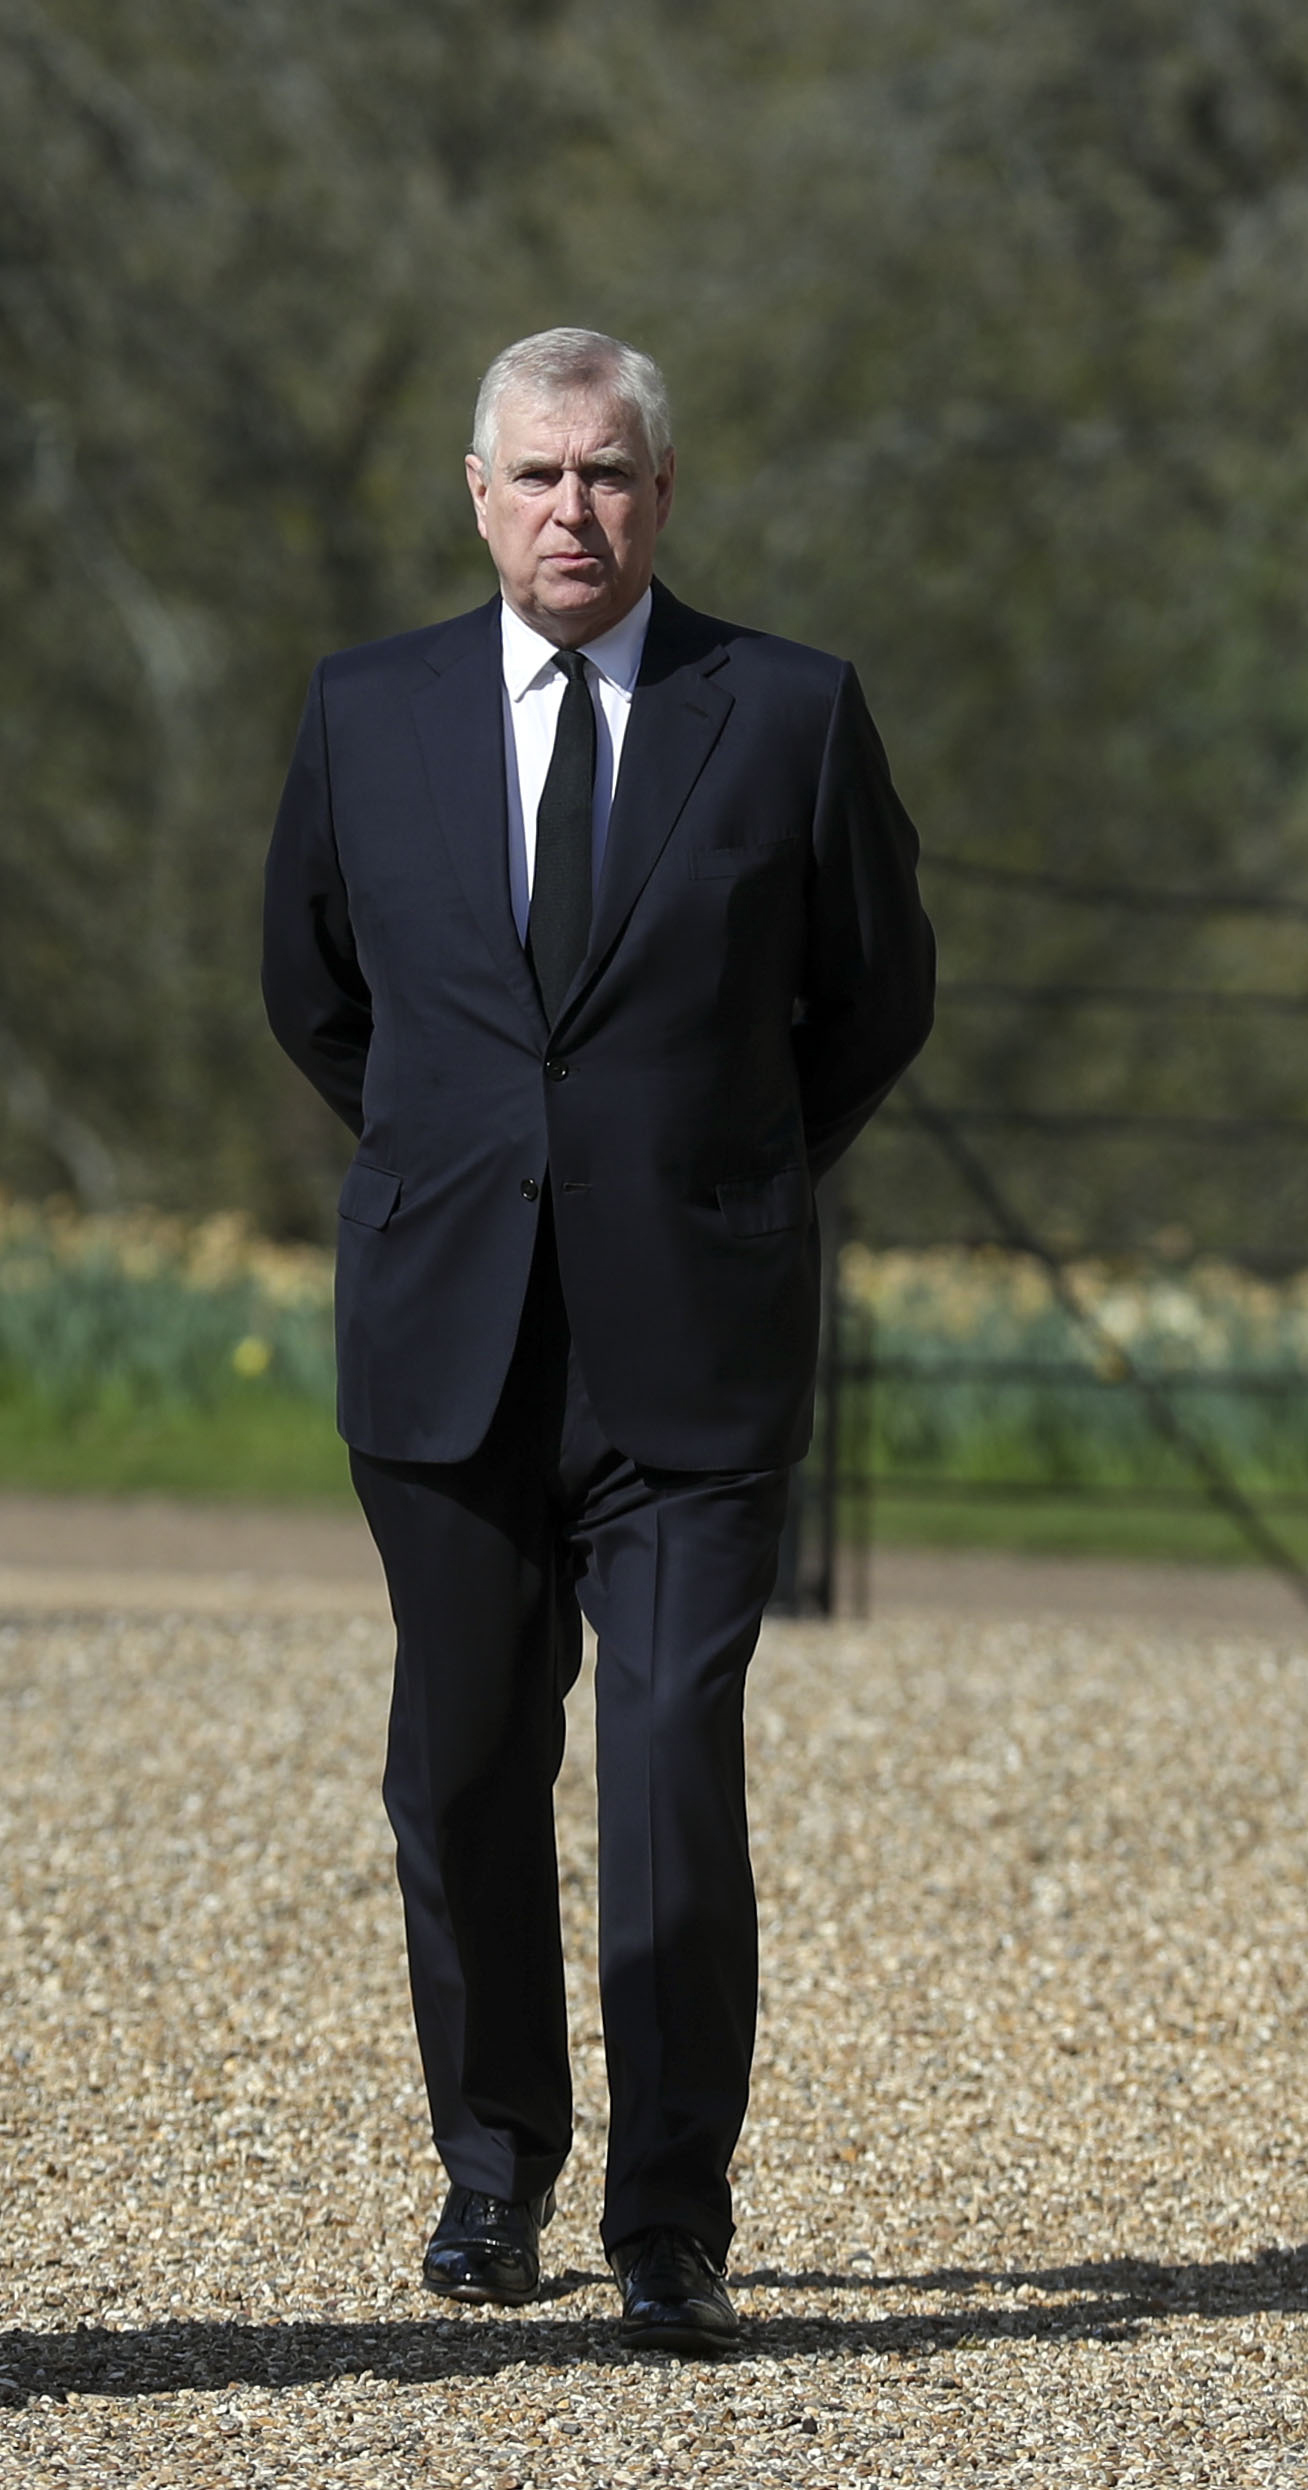 PHOTO: Prince Andrew, Duke of York on April 11, 2021 in Windsor, England.